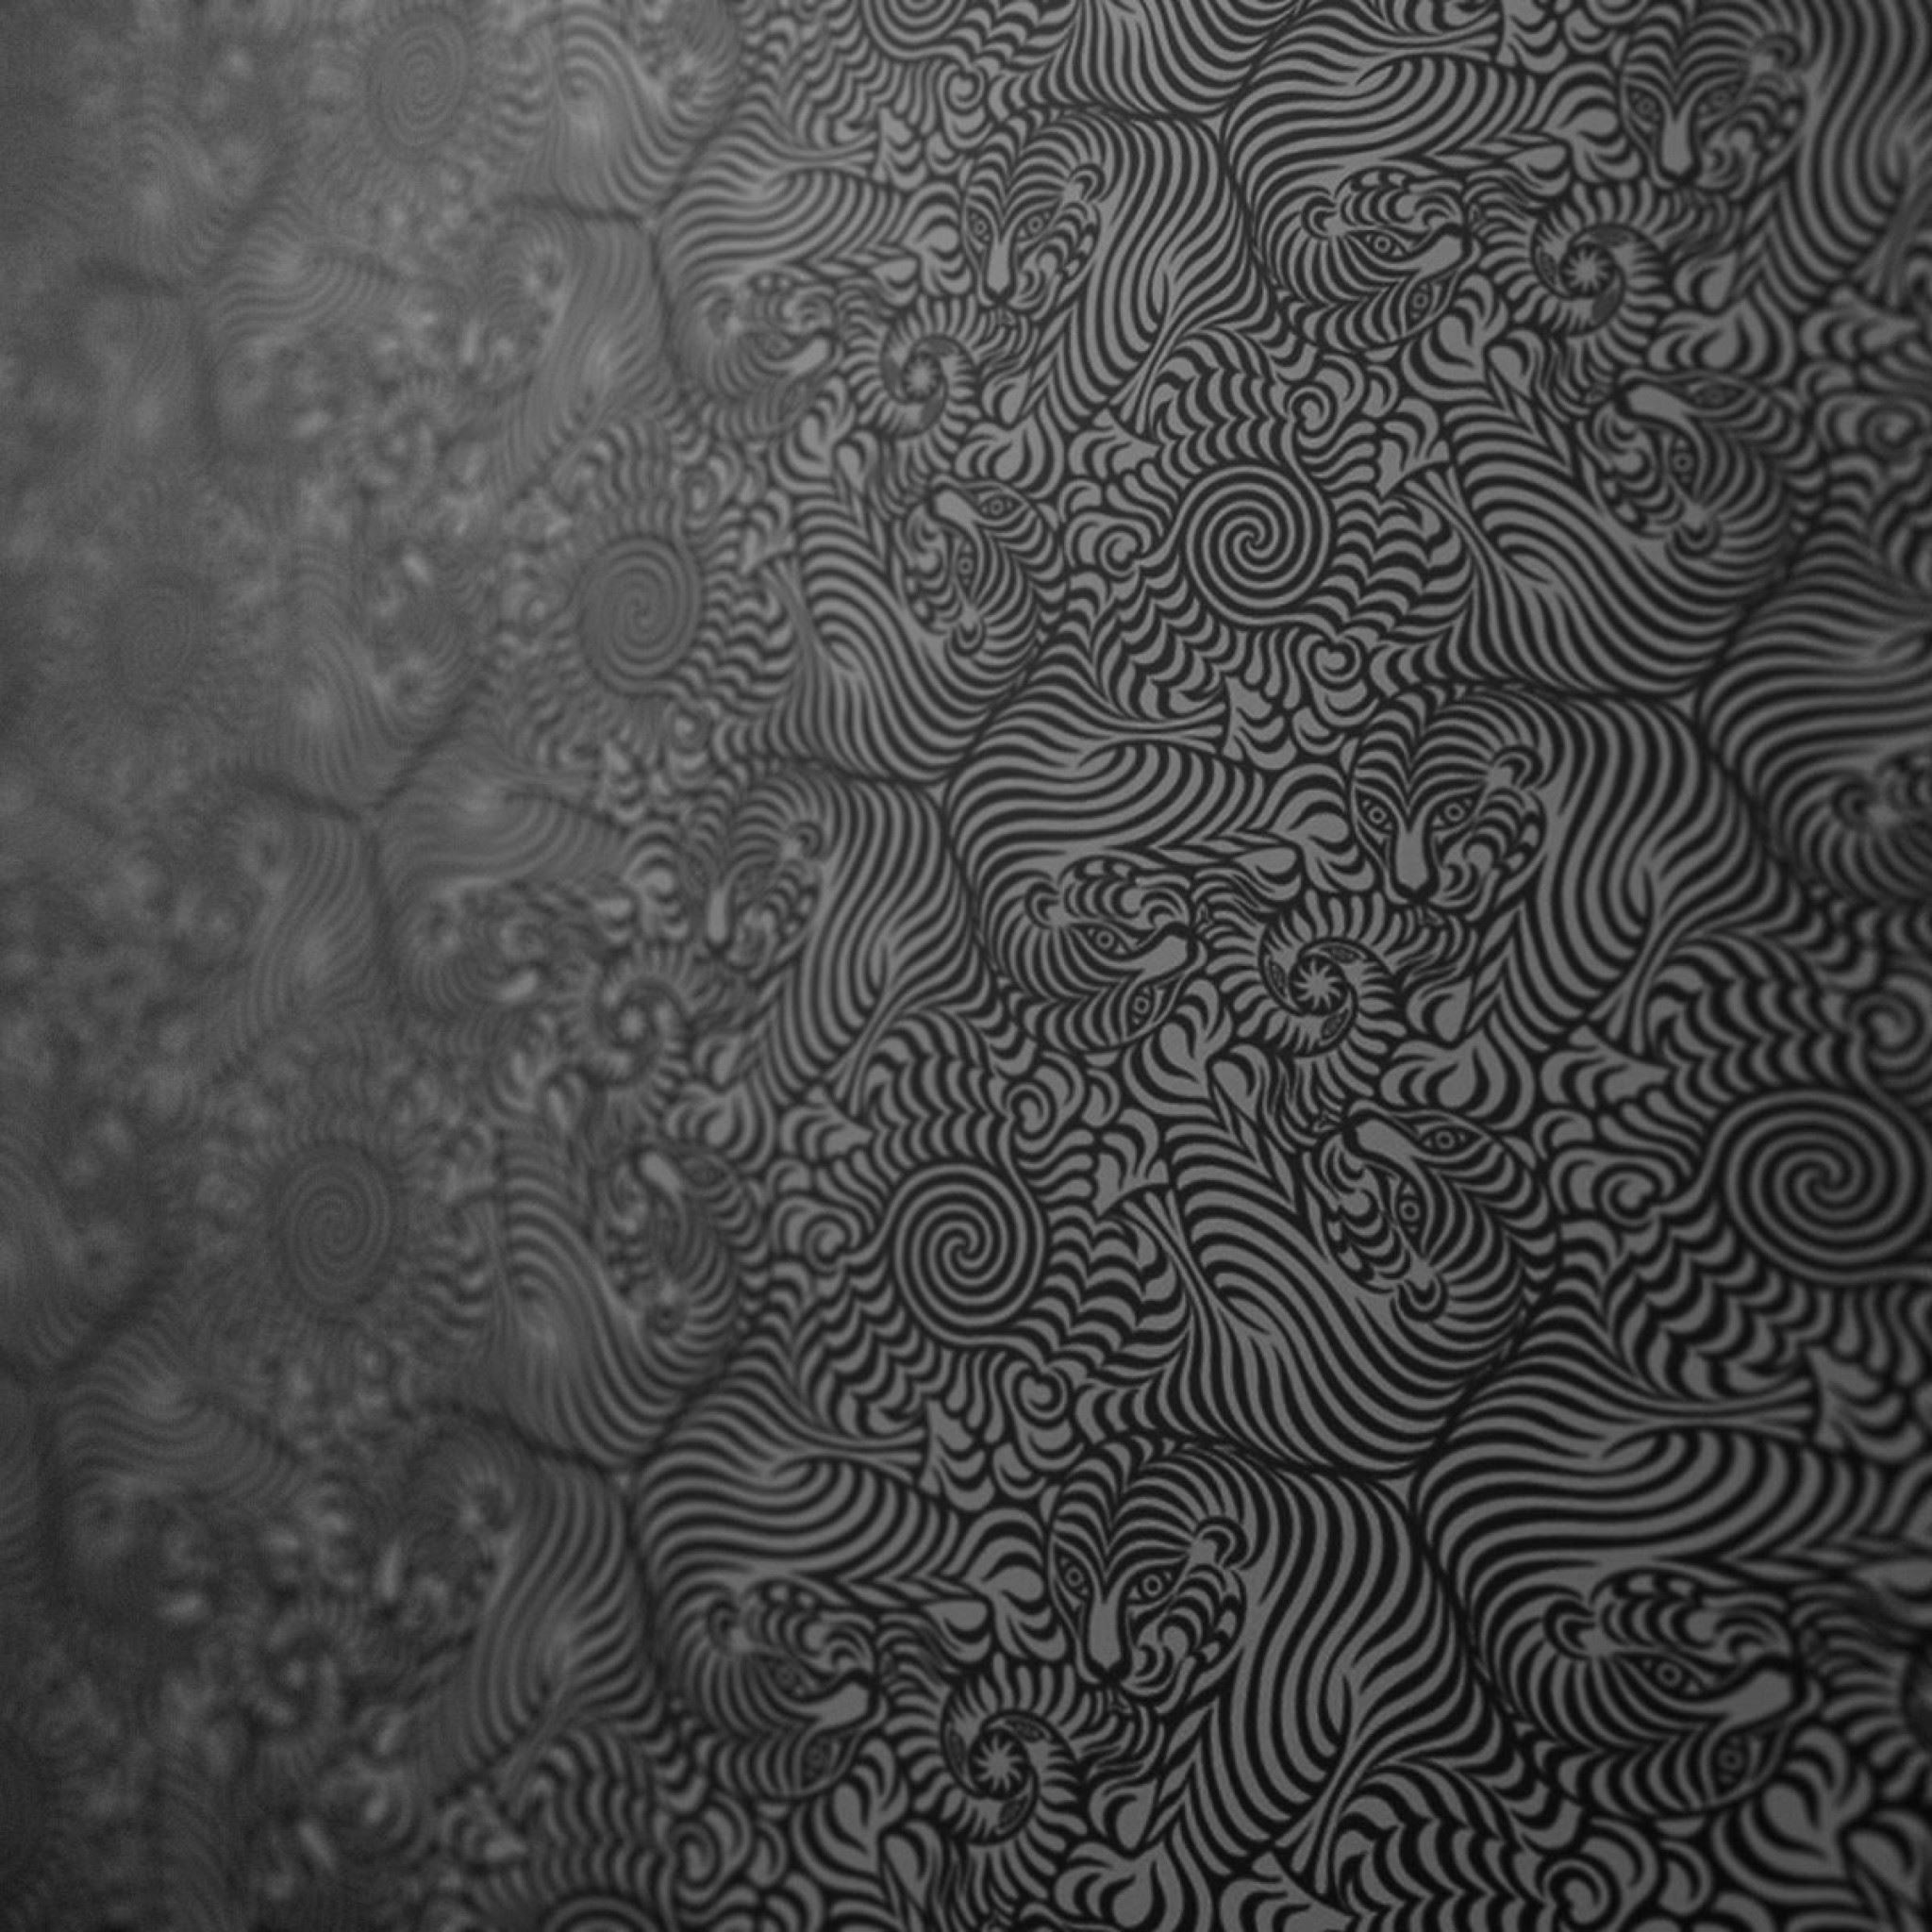 Texture Black White Patterns Tigers iPad Air Wallpaper Free Download